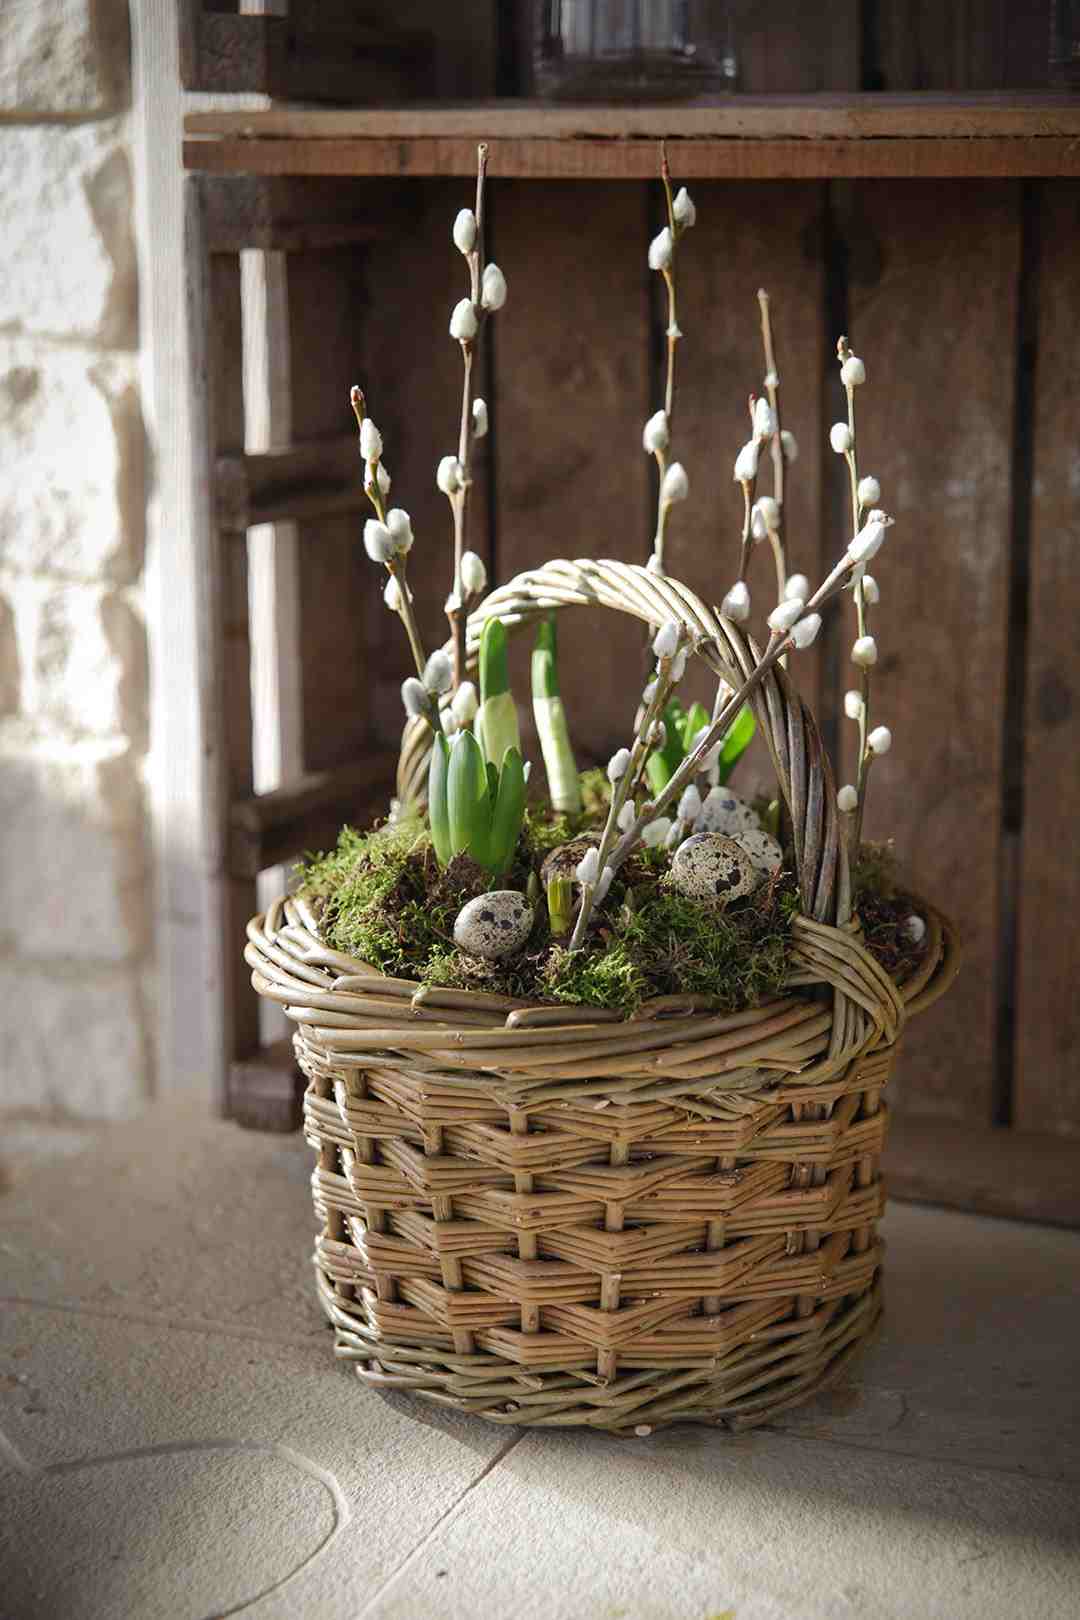 Weidenkorb bepflanzen einfach Anleitung Ostern Geschenkideen Garten gestalten